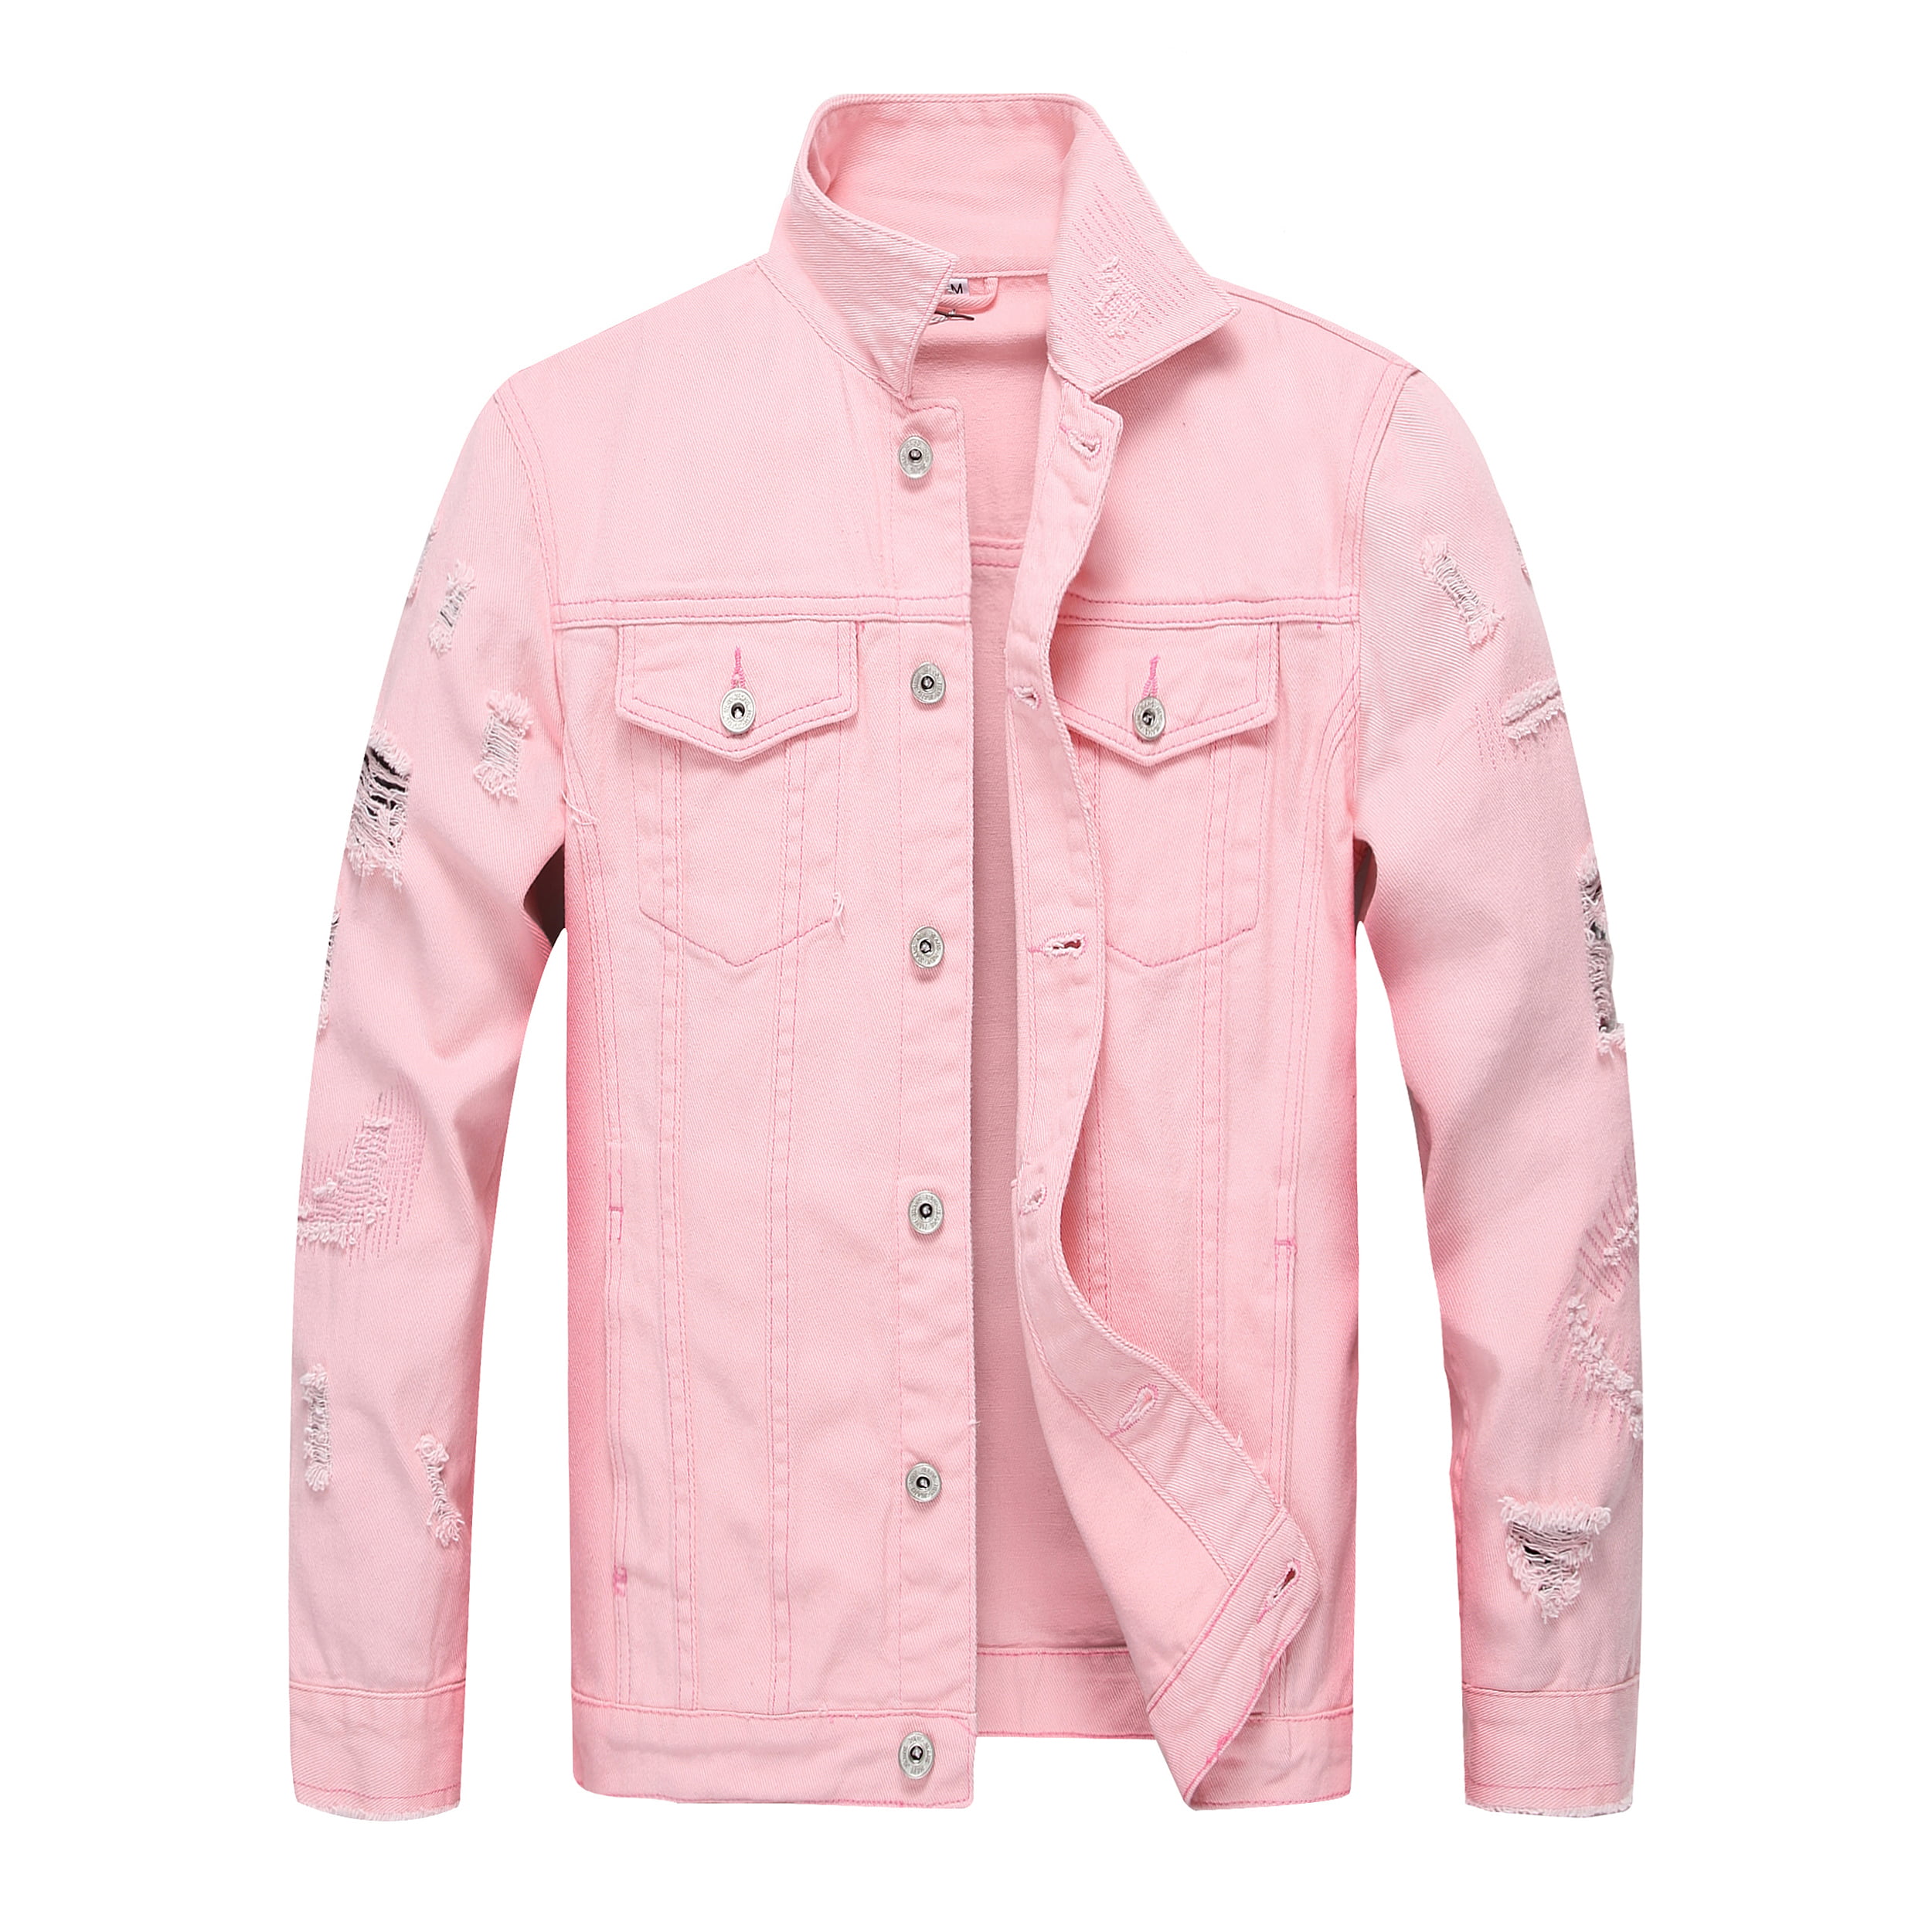 LZLER Ripped Jean Jacket for Men Pink Fashion Denim Jacket Men